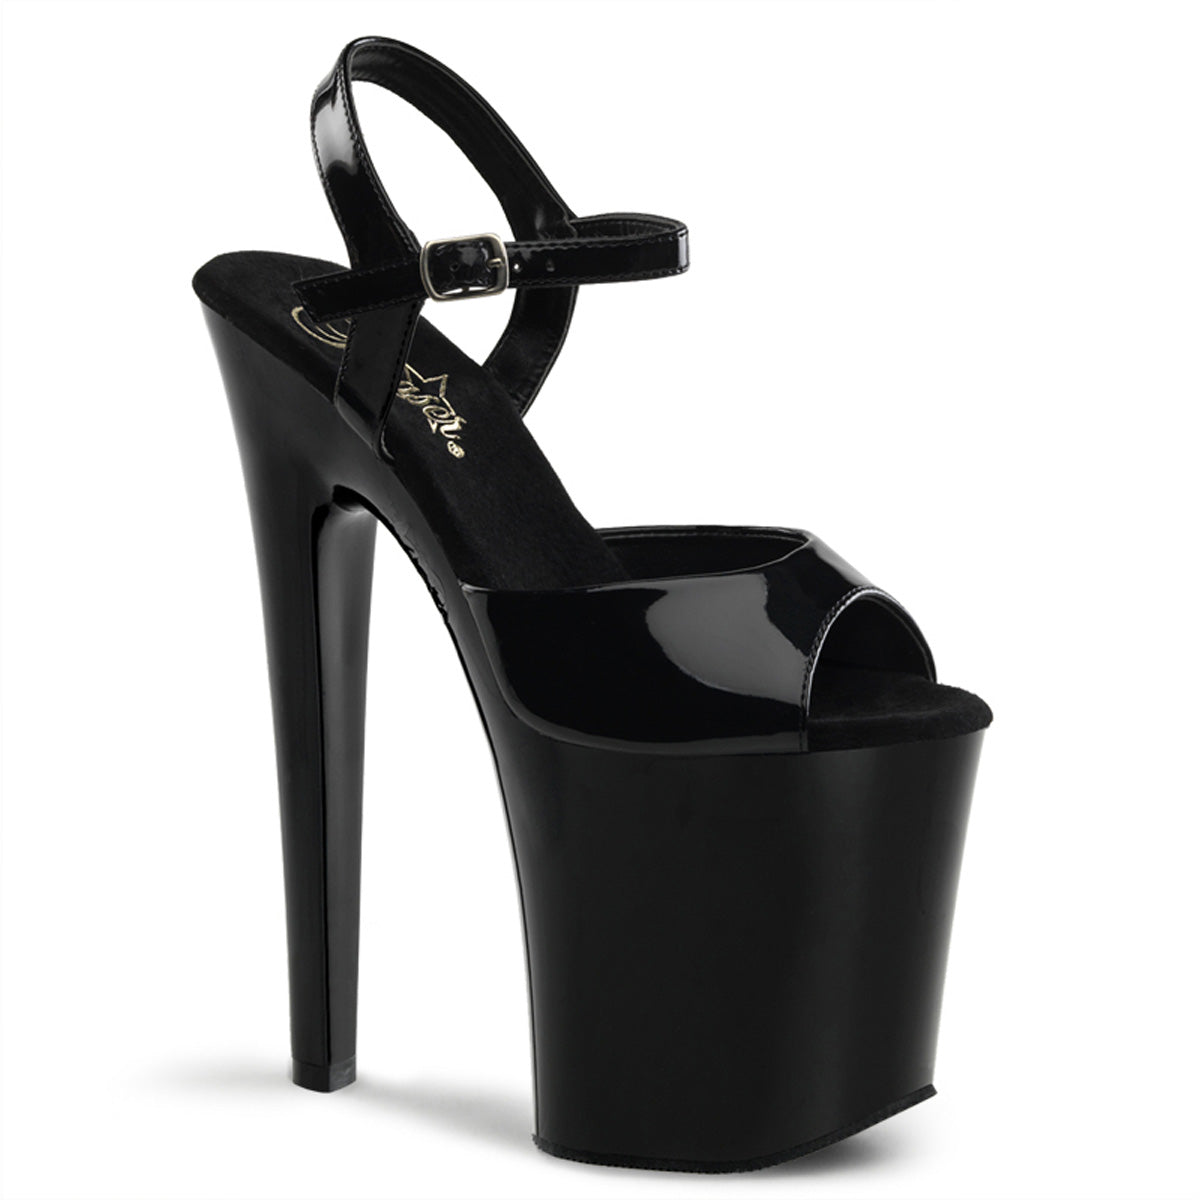 XTREME-809 Black Patent Platform Sandal